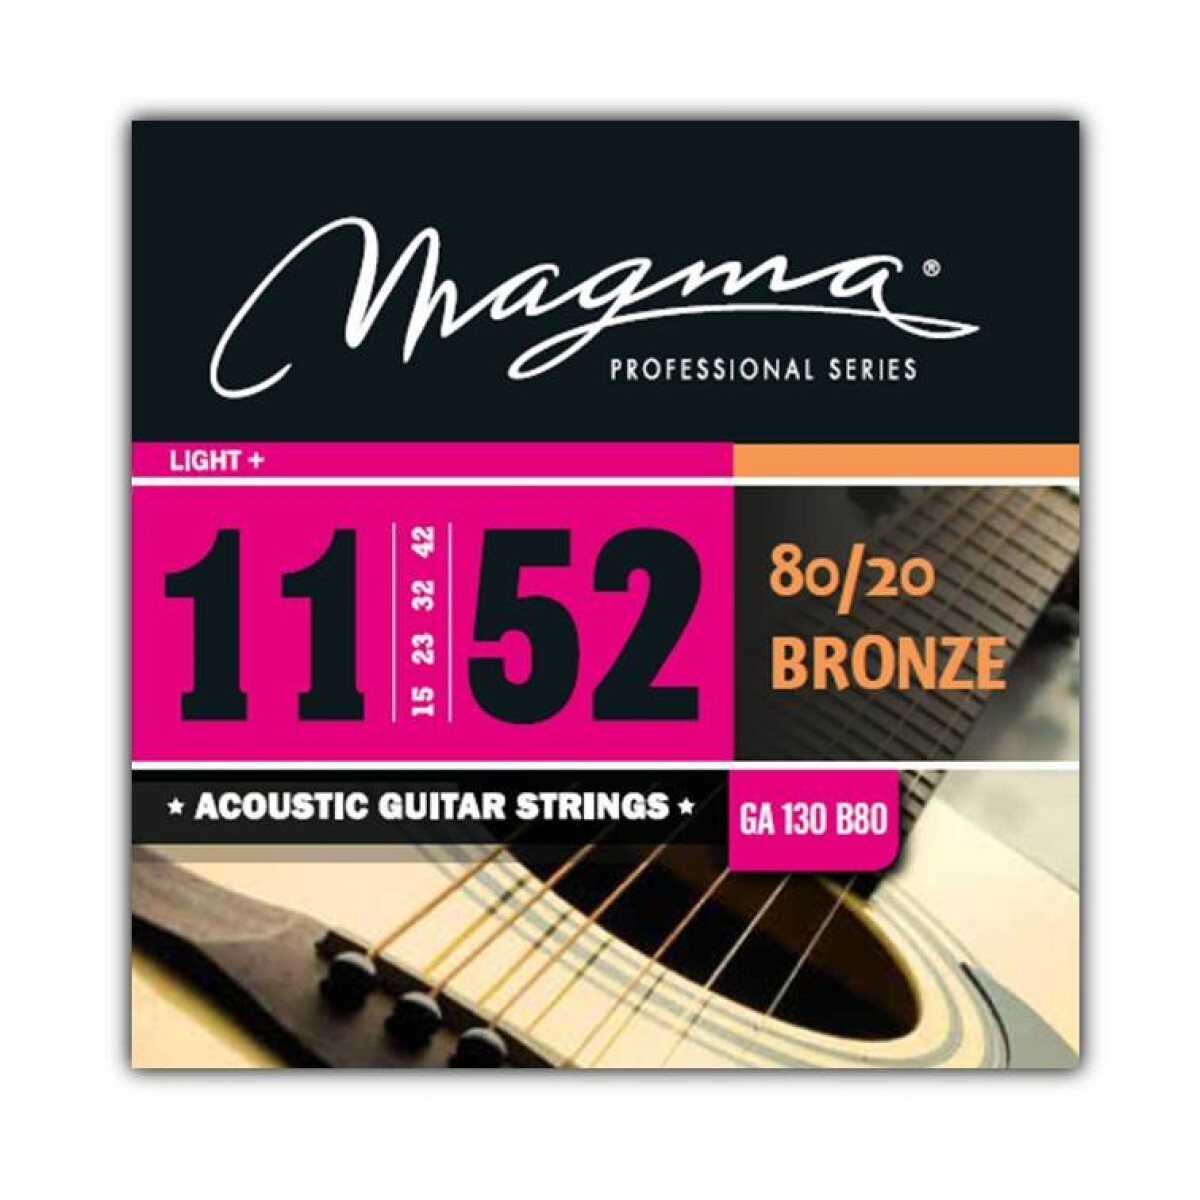 Encordado Guitarra Acustica Magma Bronce 80/20 .011 GA130B80 